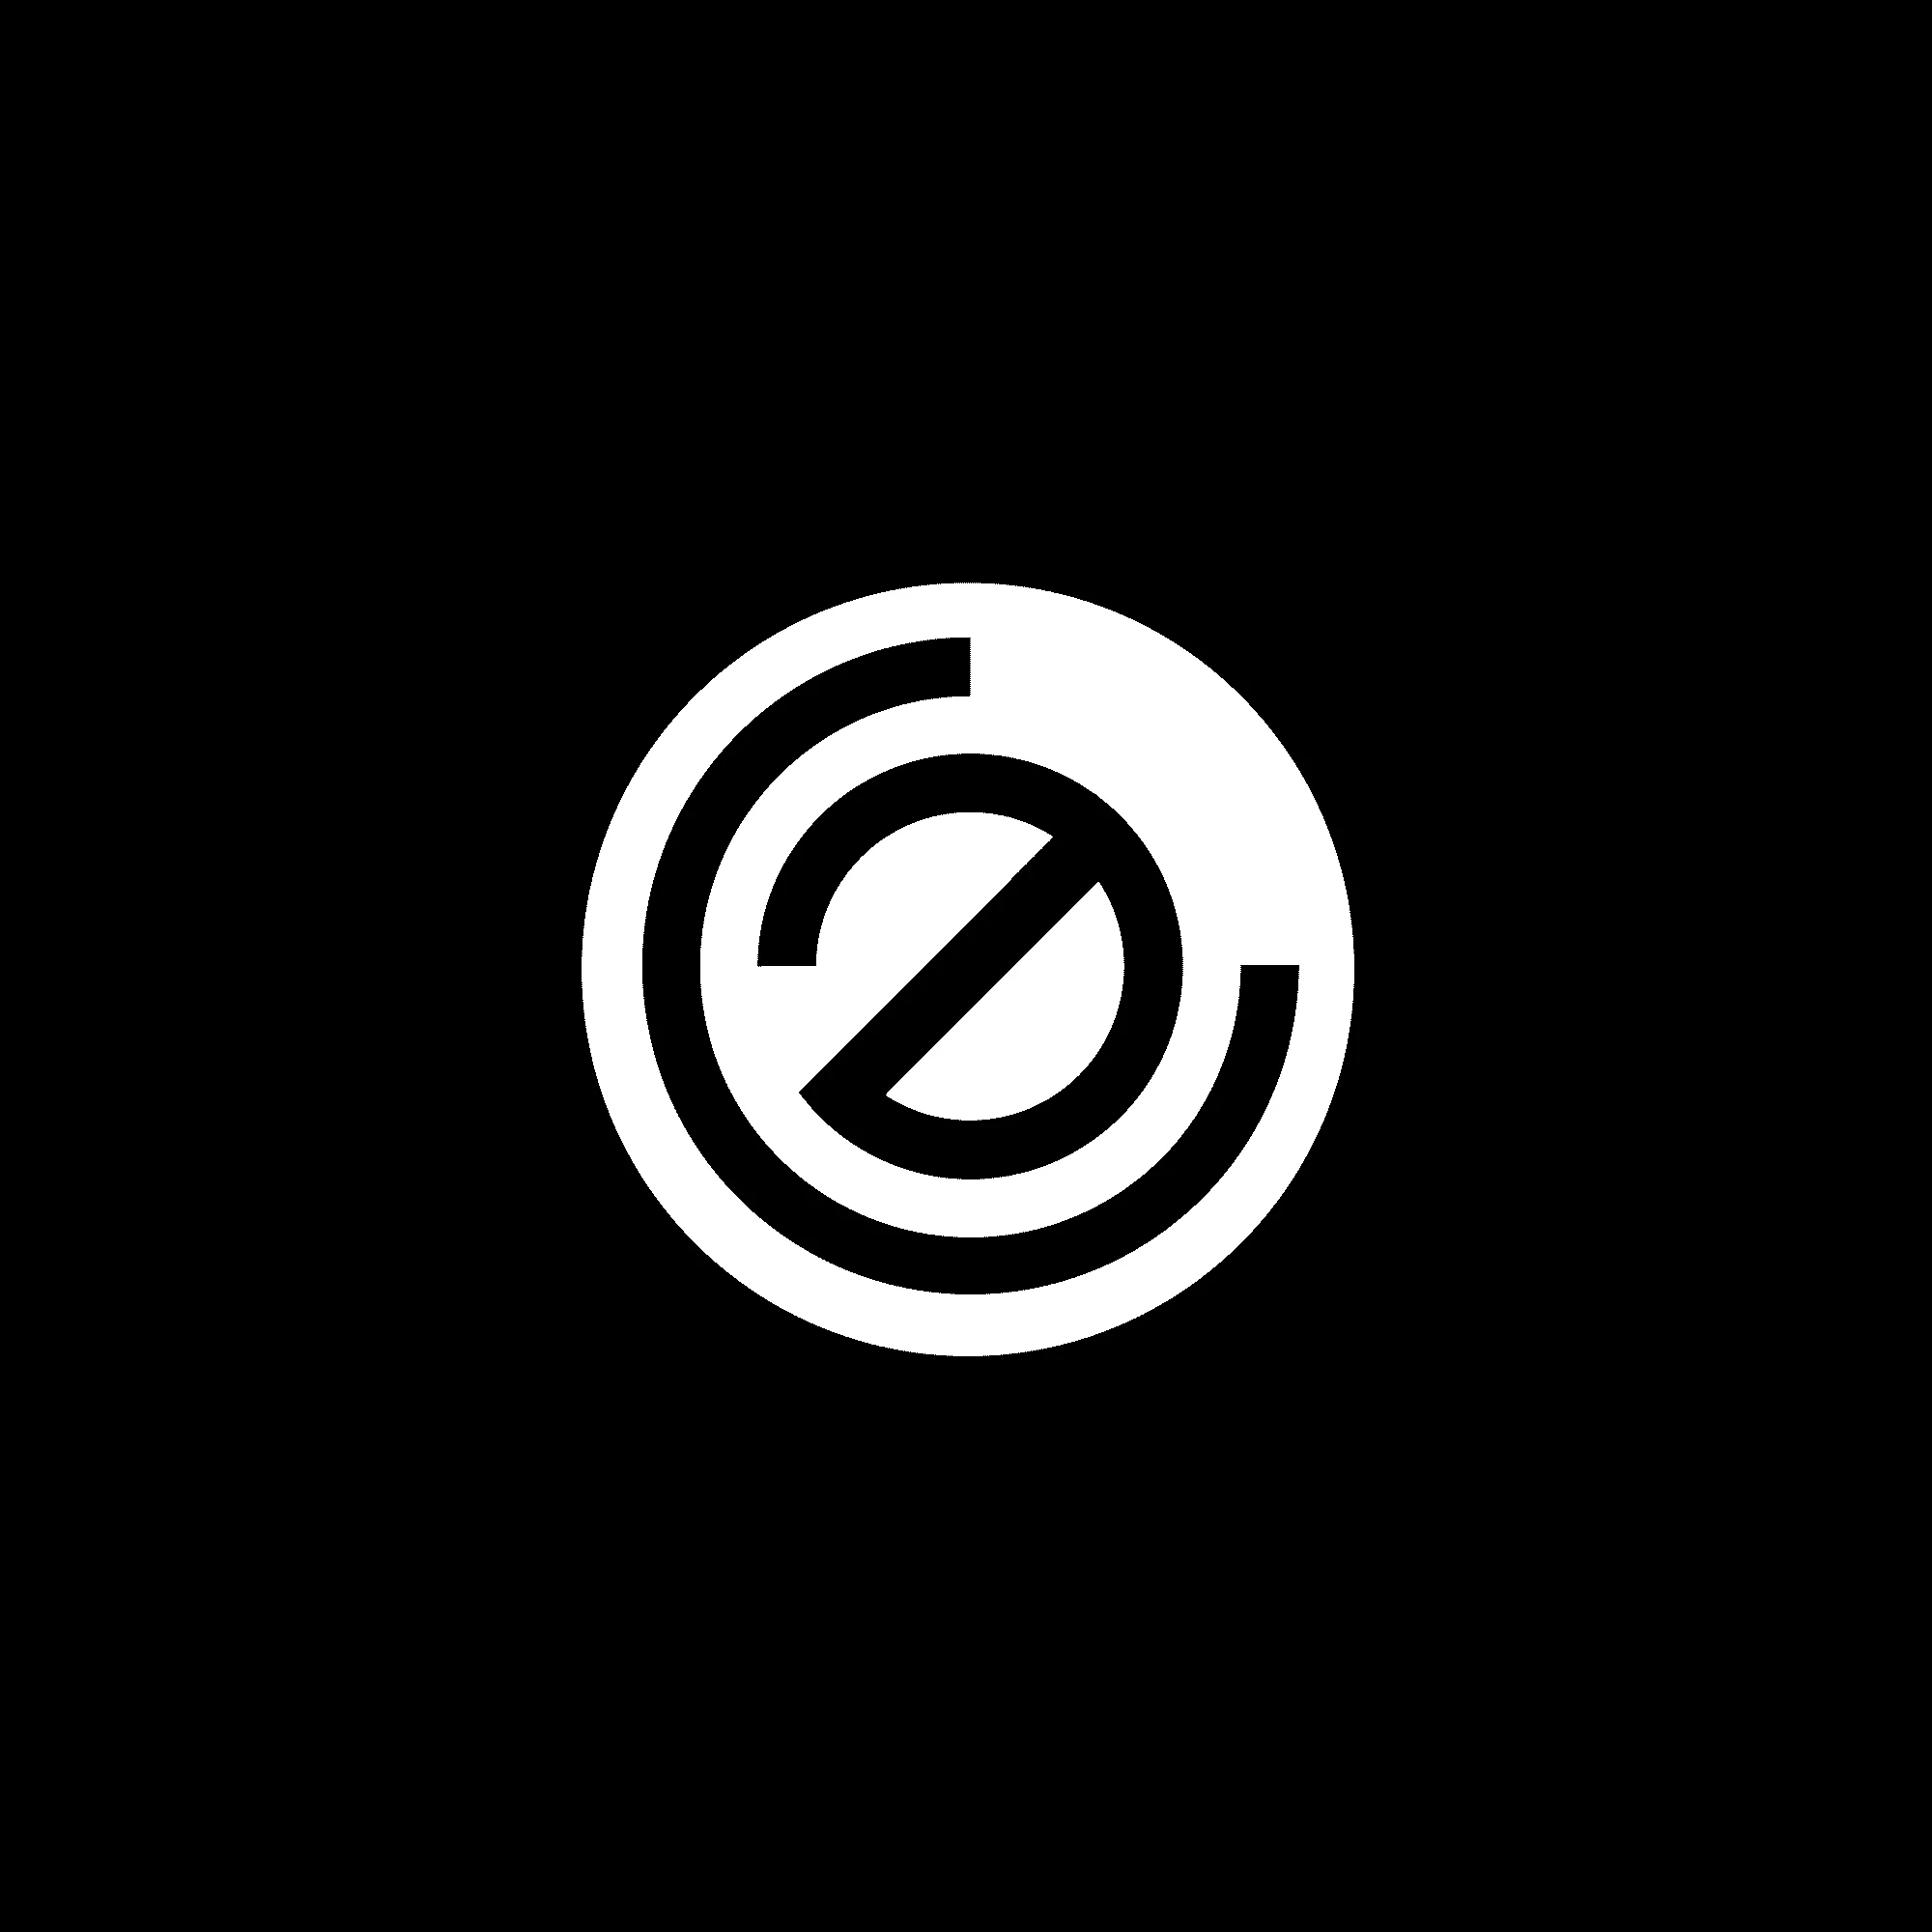 Branding logo design lettering in circle, black and white